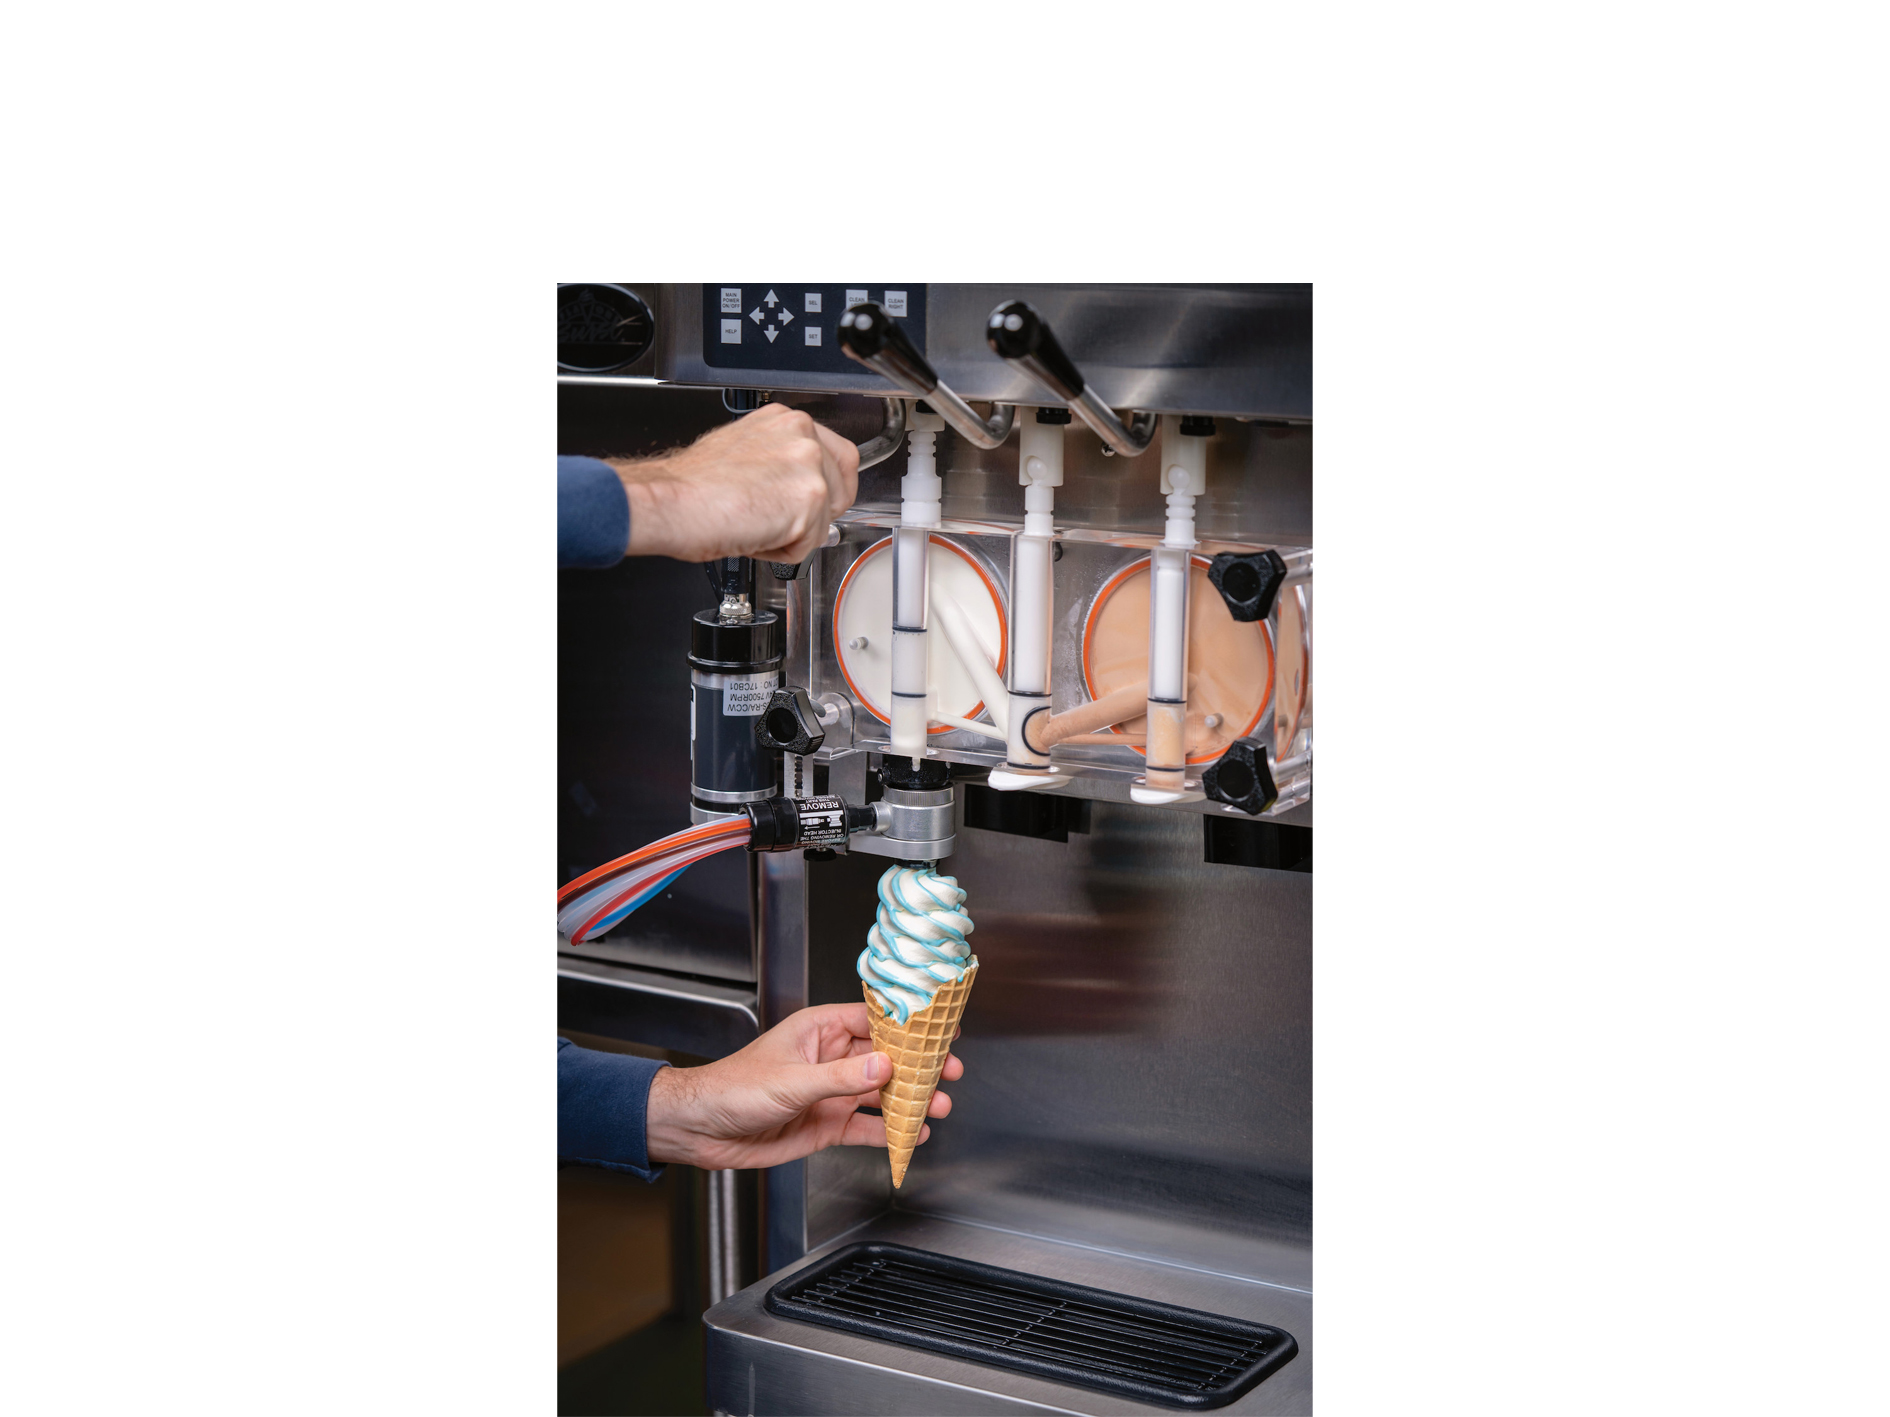 FEM launches Stoelting ice cream and frozen dessert equipment